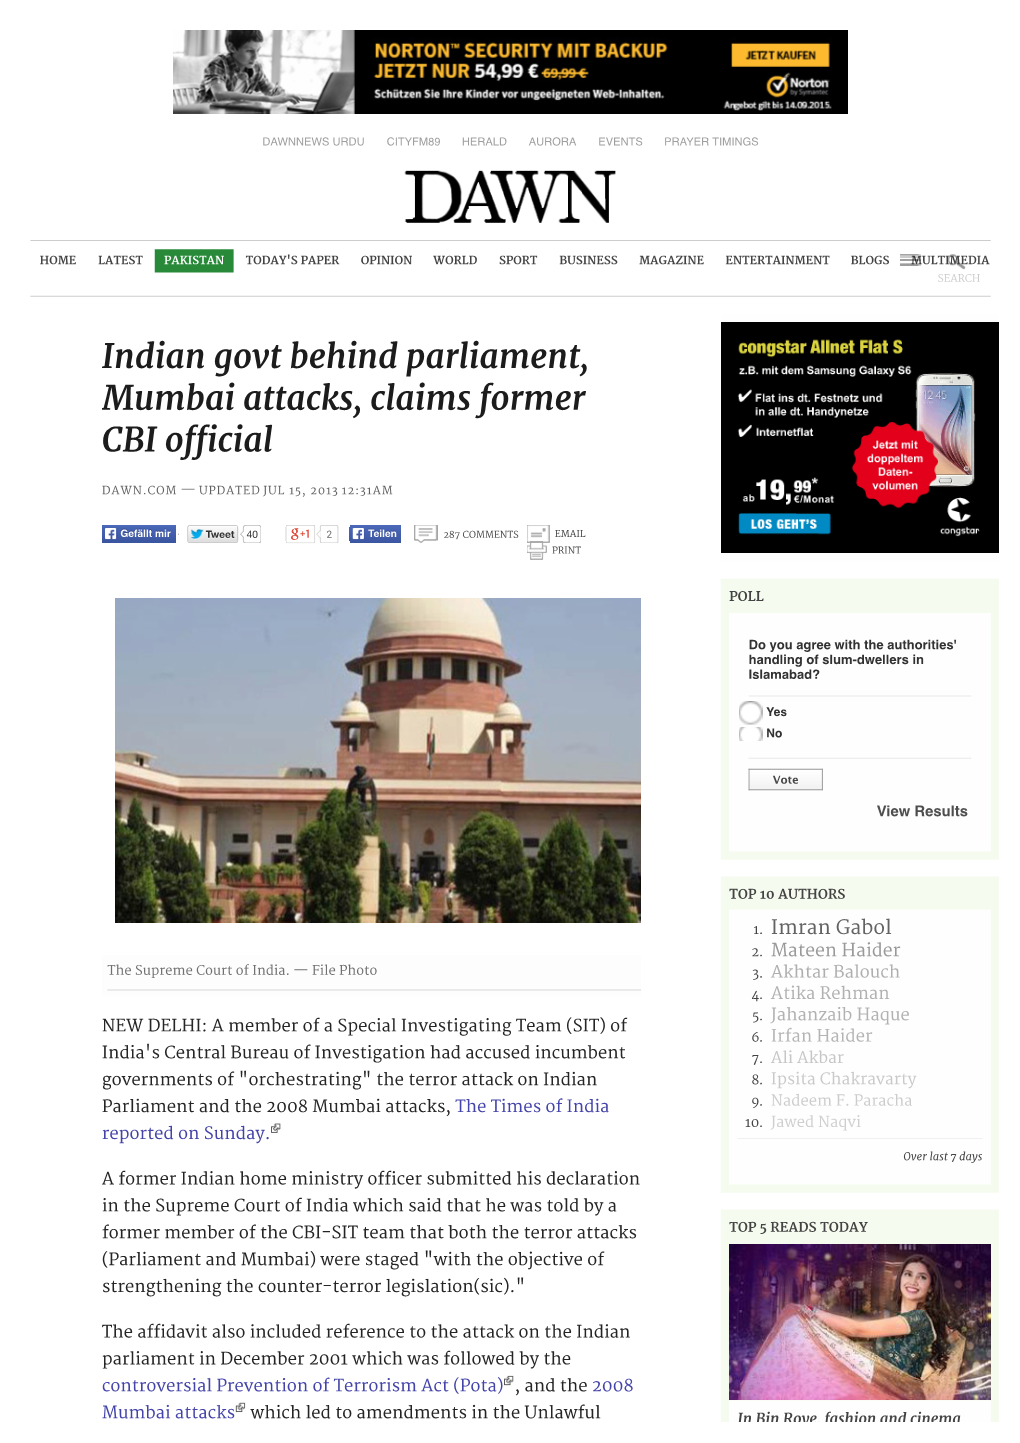 Indian Govt Behind Parliament, Mumbai Attacks, Claims Former CBI Ofcial